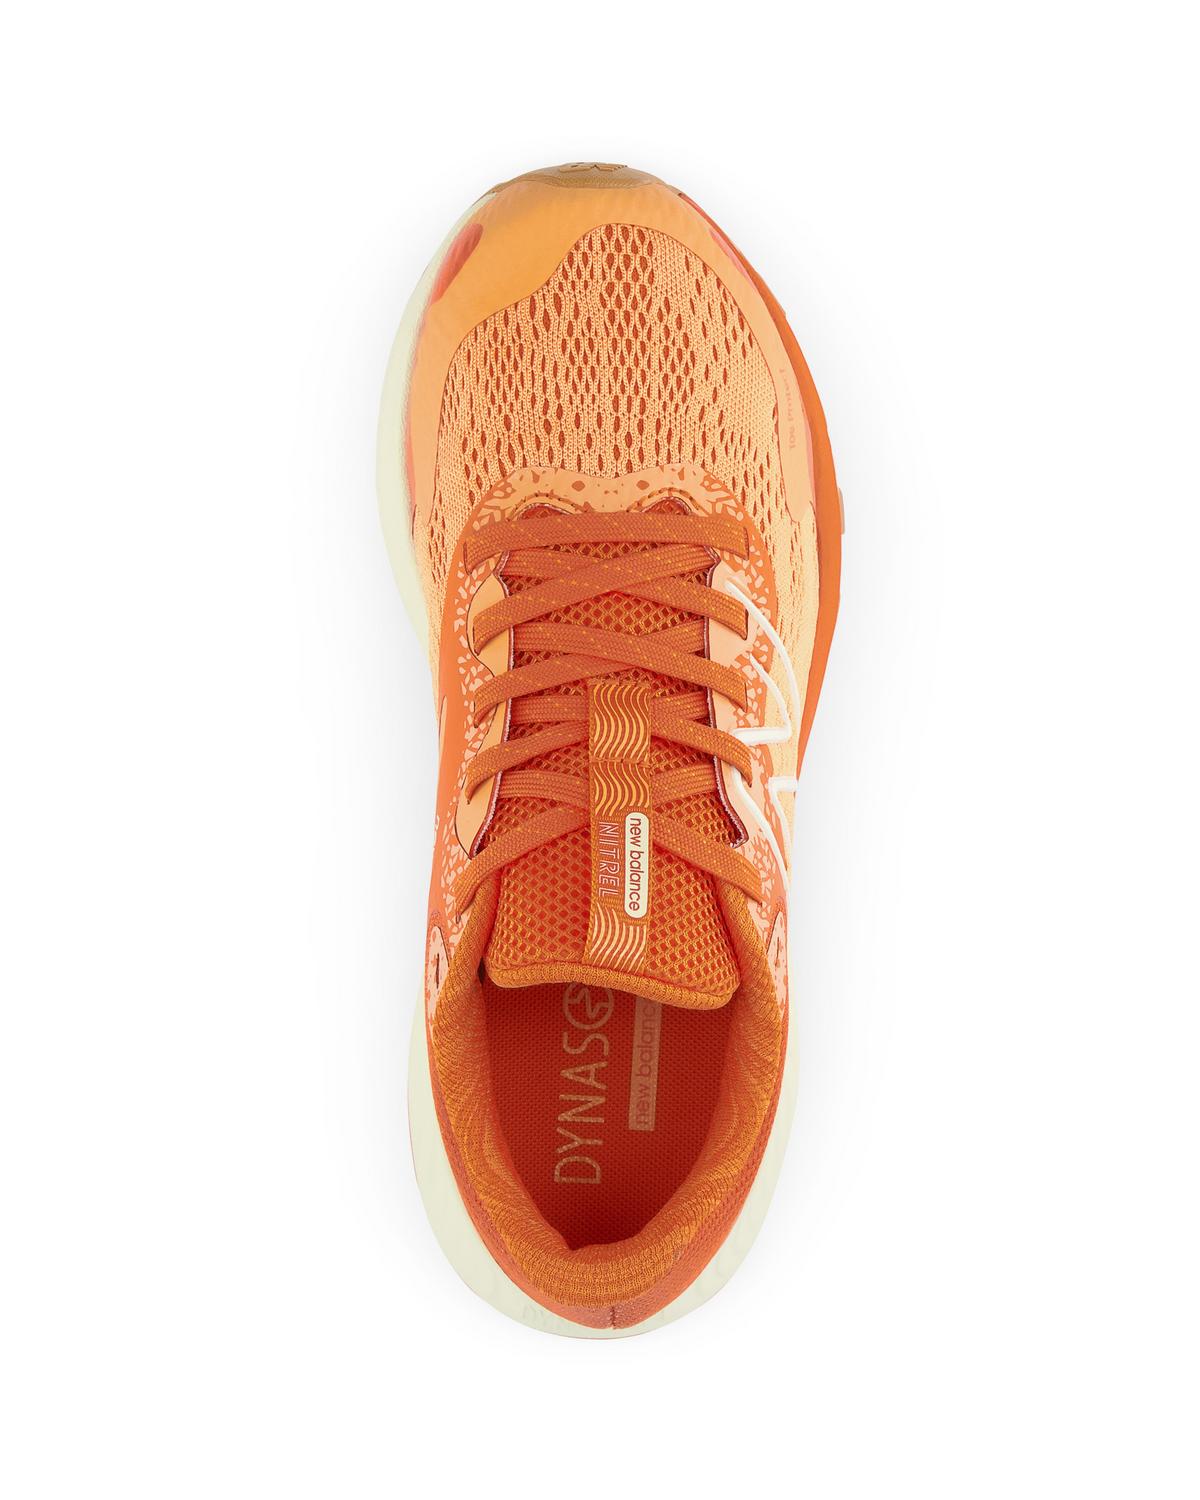 New Balance Women's DynaSoft Nitrel V5 Trail Running Shoes -  Orange